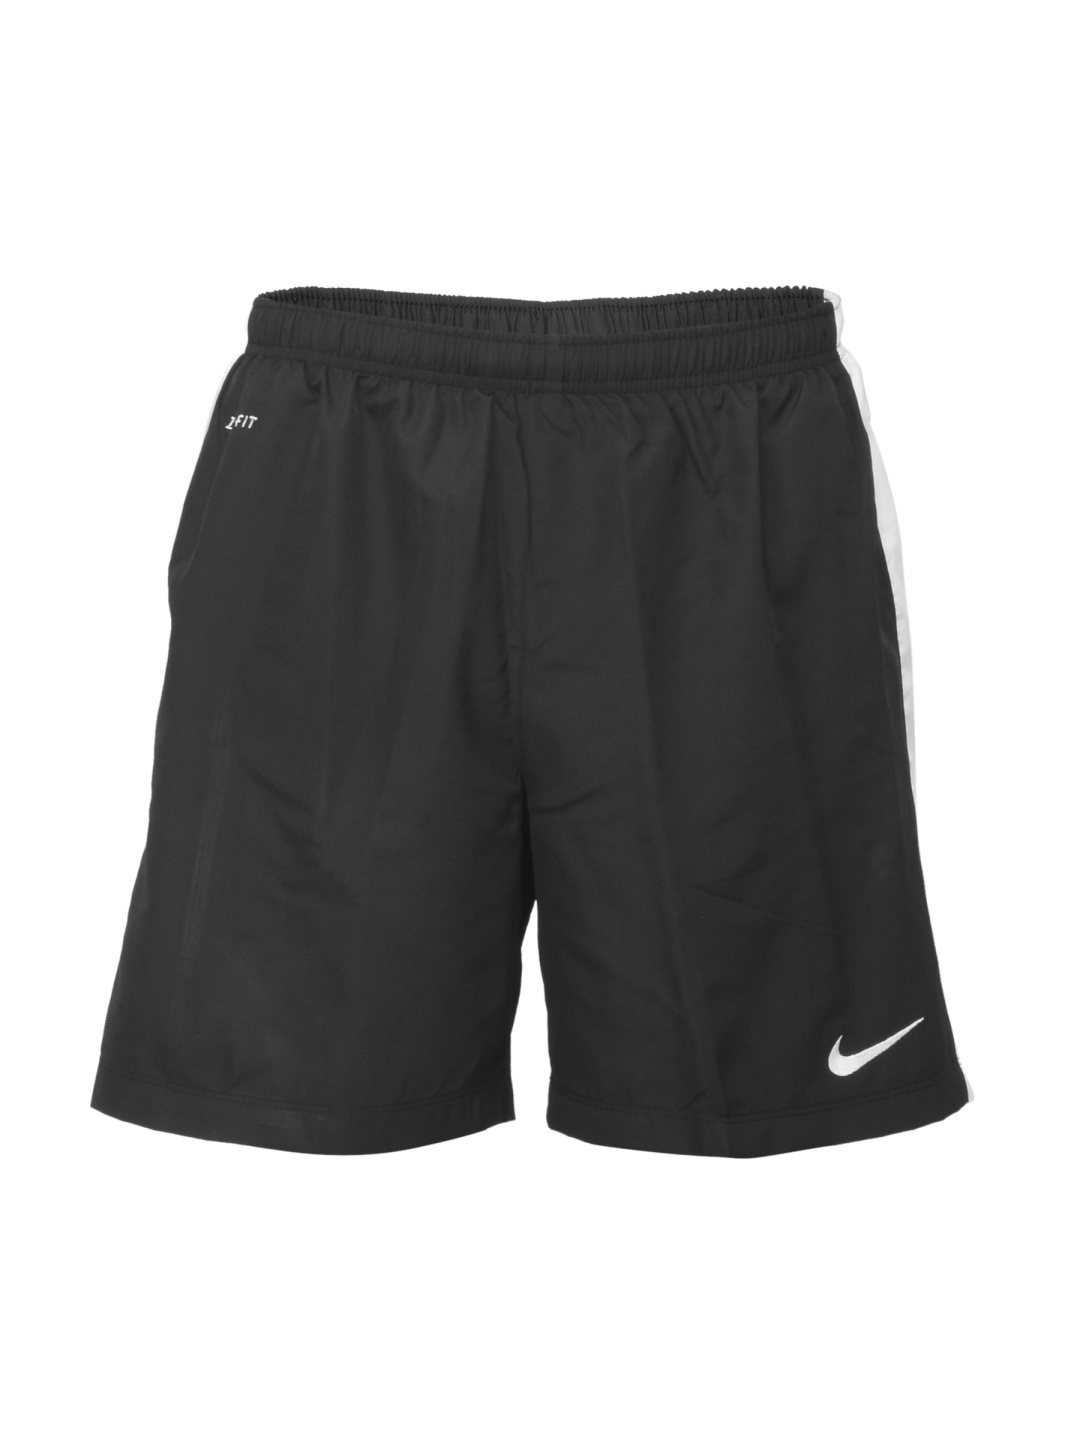 Buy Nike Men Black Shorts - Shorts for Men 30609 | Myntra